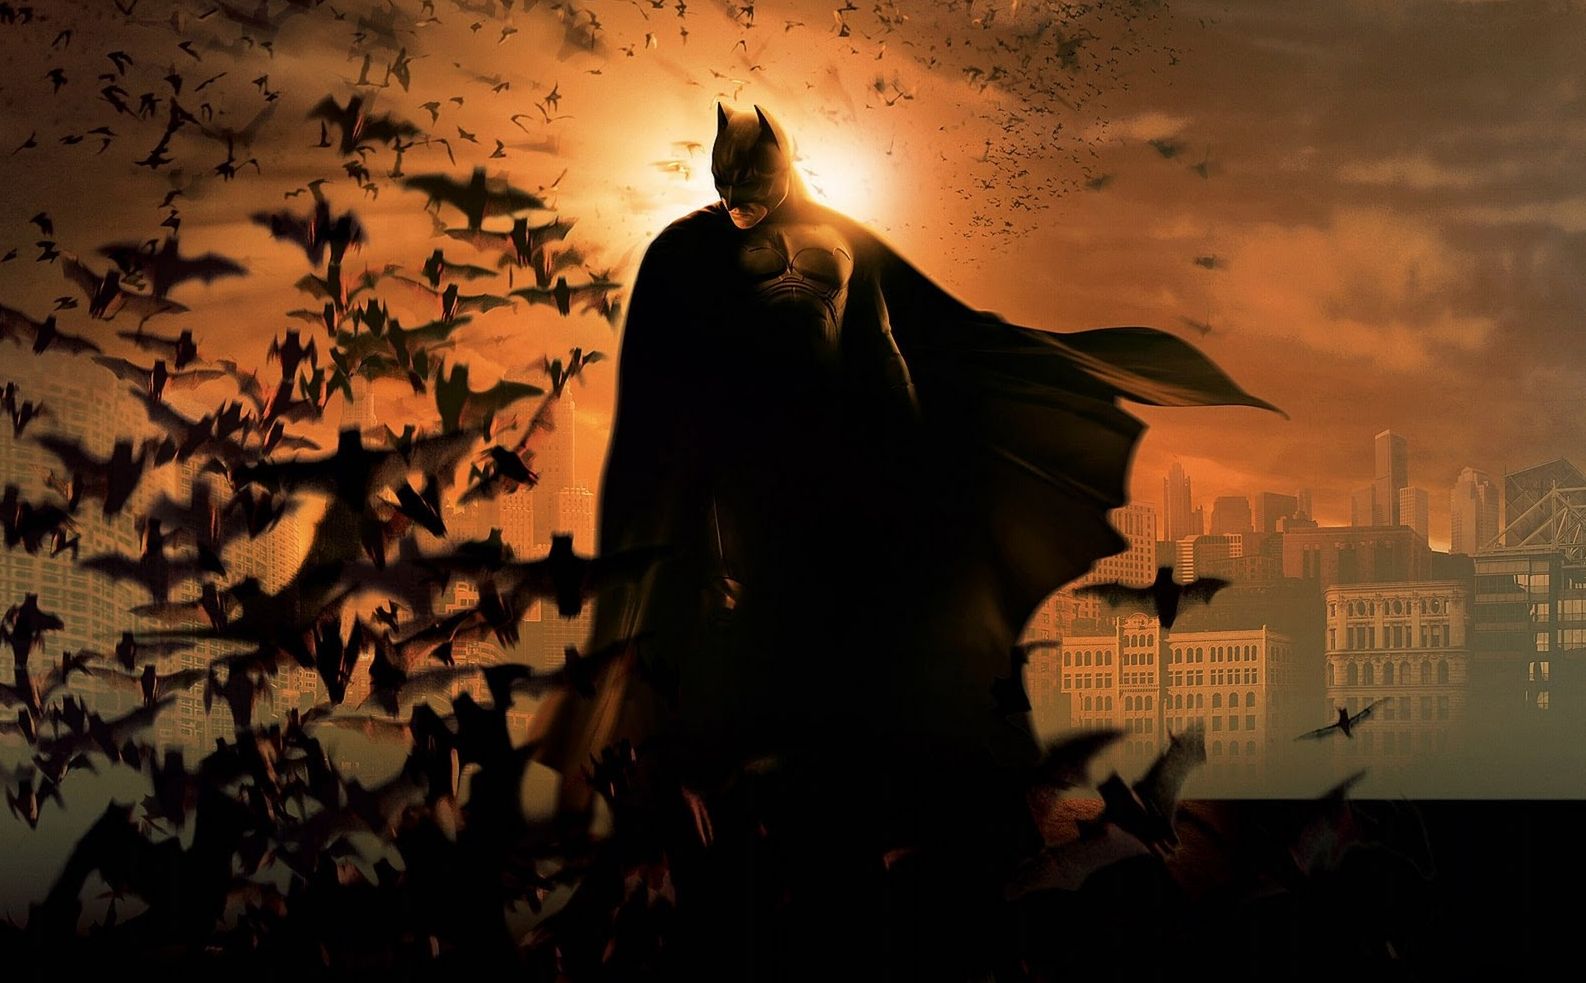 Christian Bale - Batman Begins (2005), The Dark Knight (2008), The Dark Knight Rises (2012)